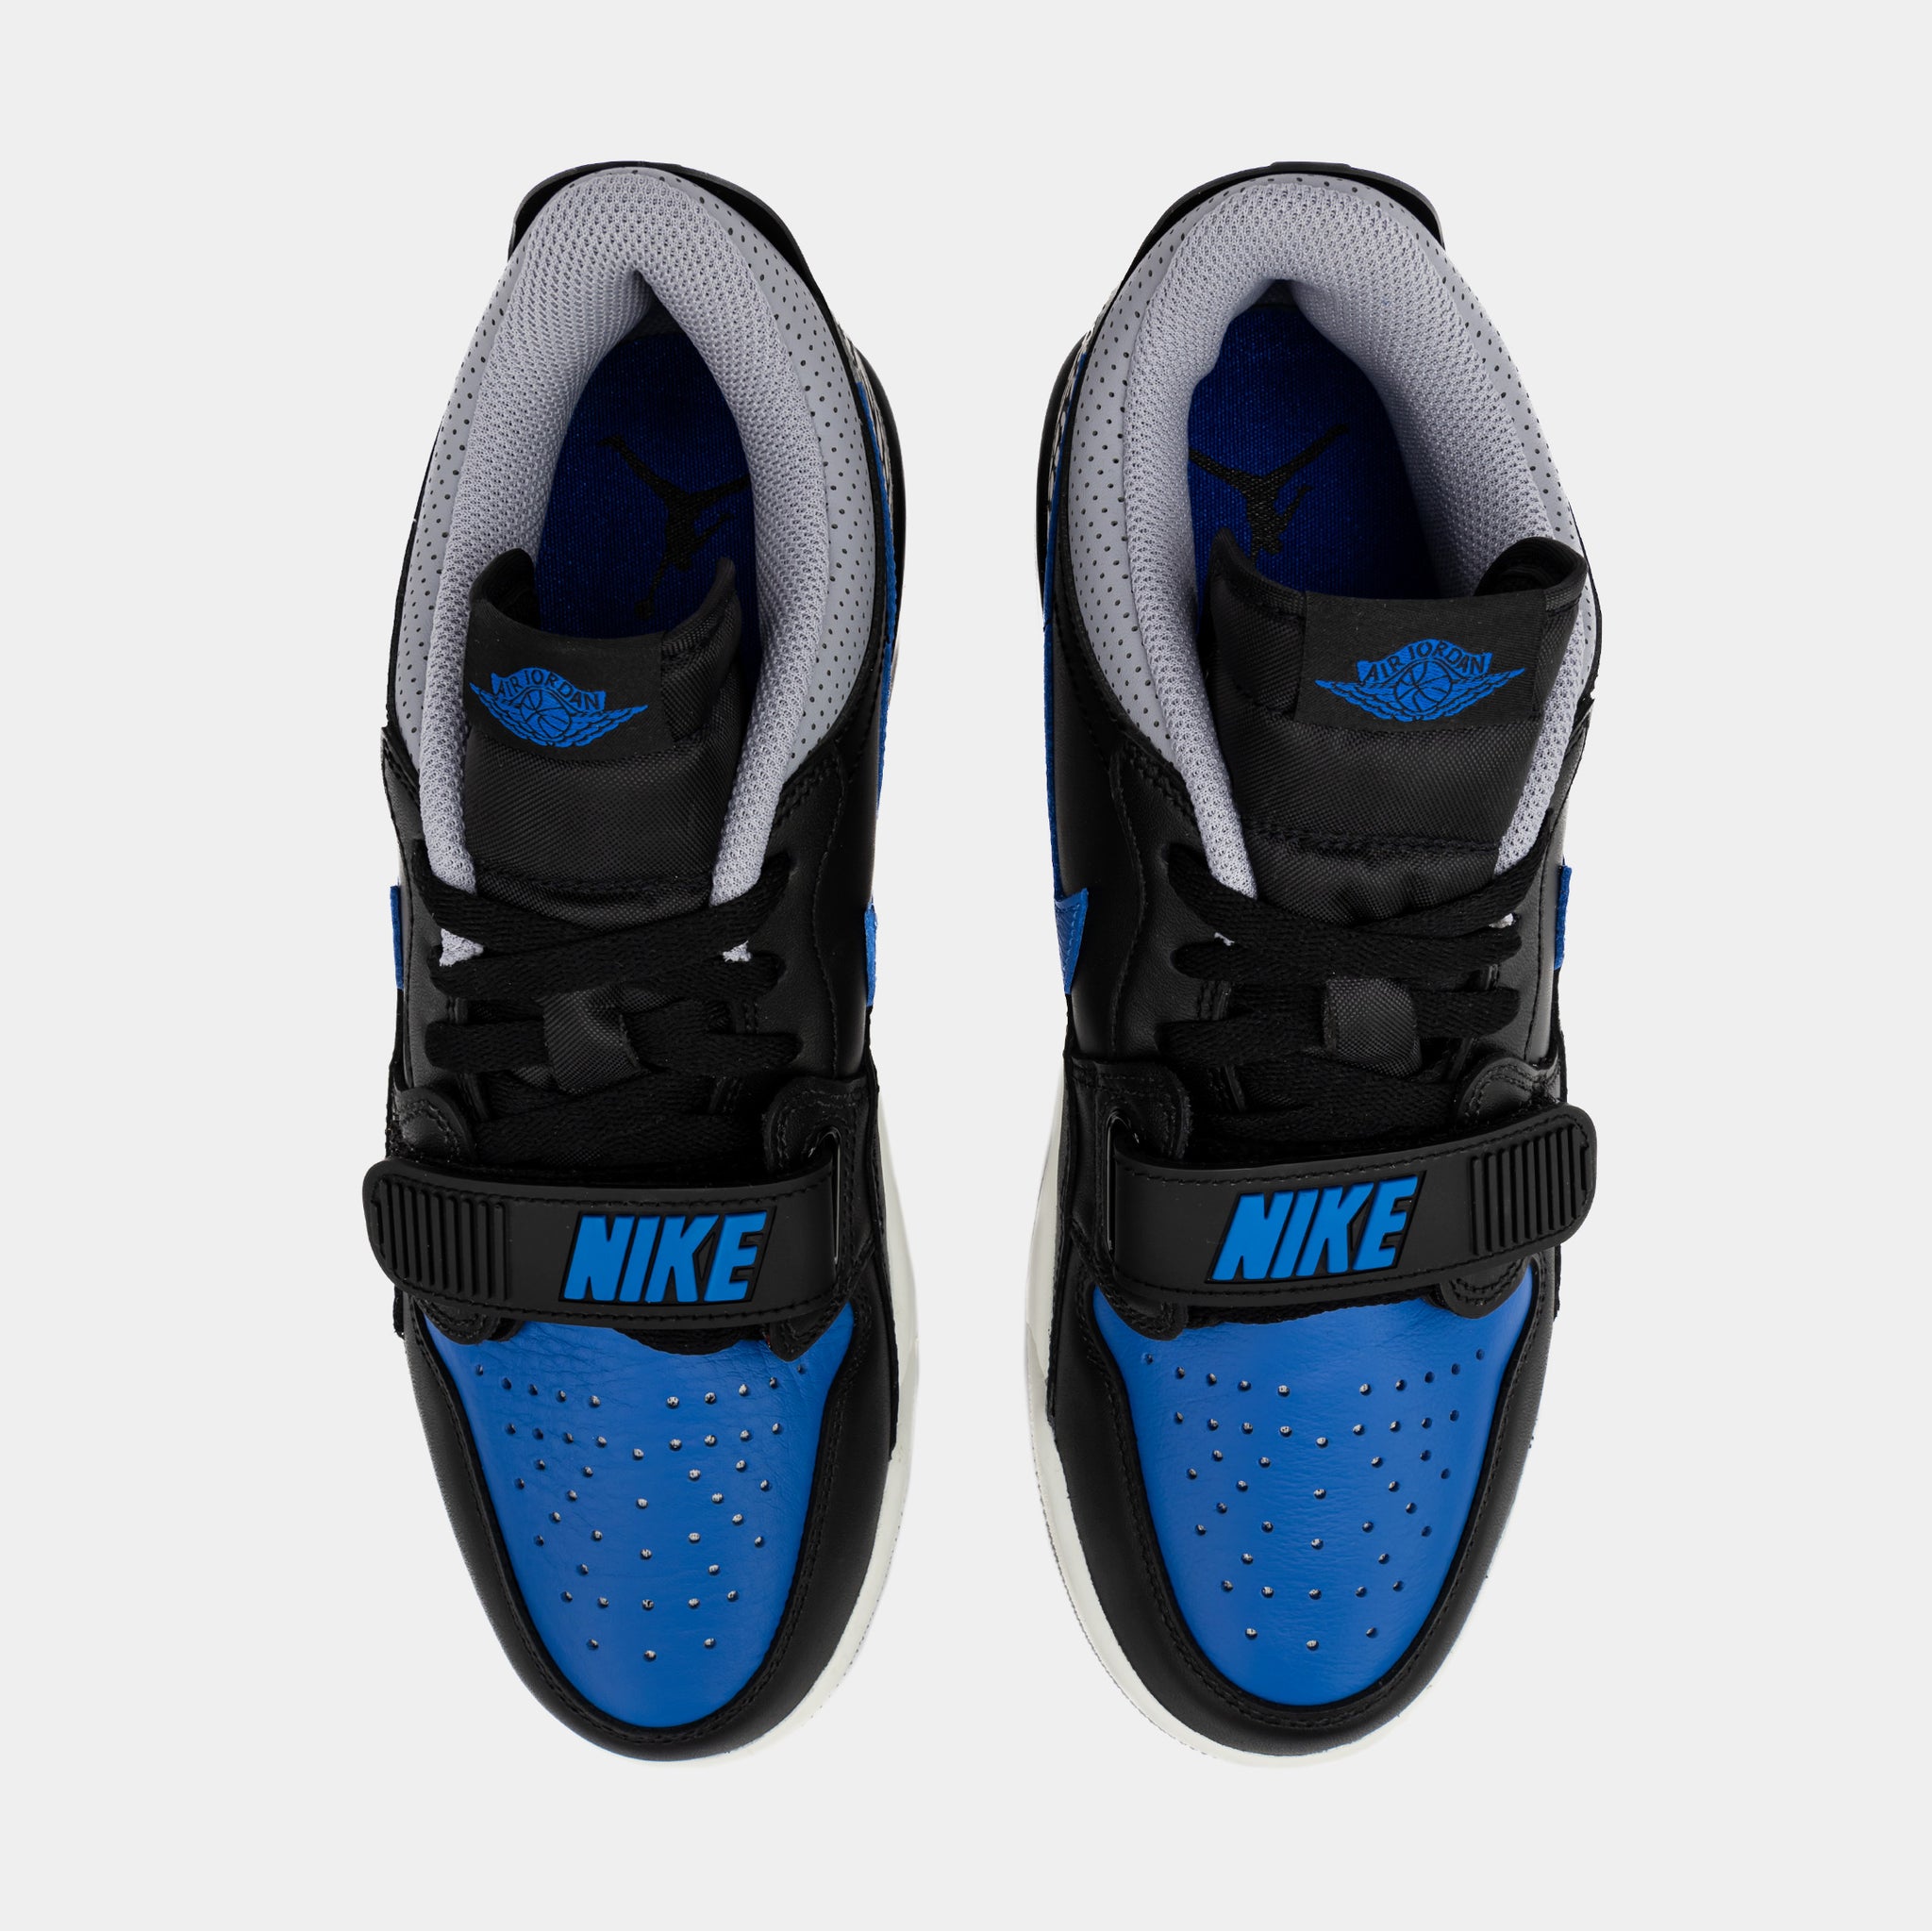 Air Jordan Legacy 312 Low Royal Blue Mens Basketball Shoes  (Black/White/Cement Grey/Game Royal)